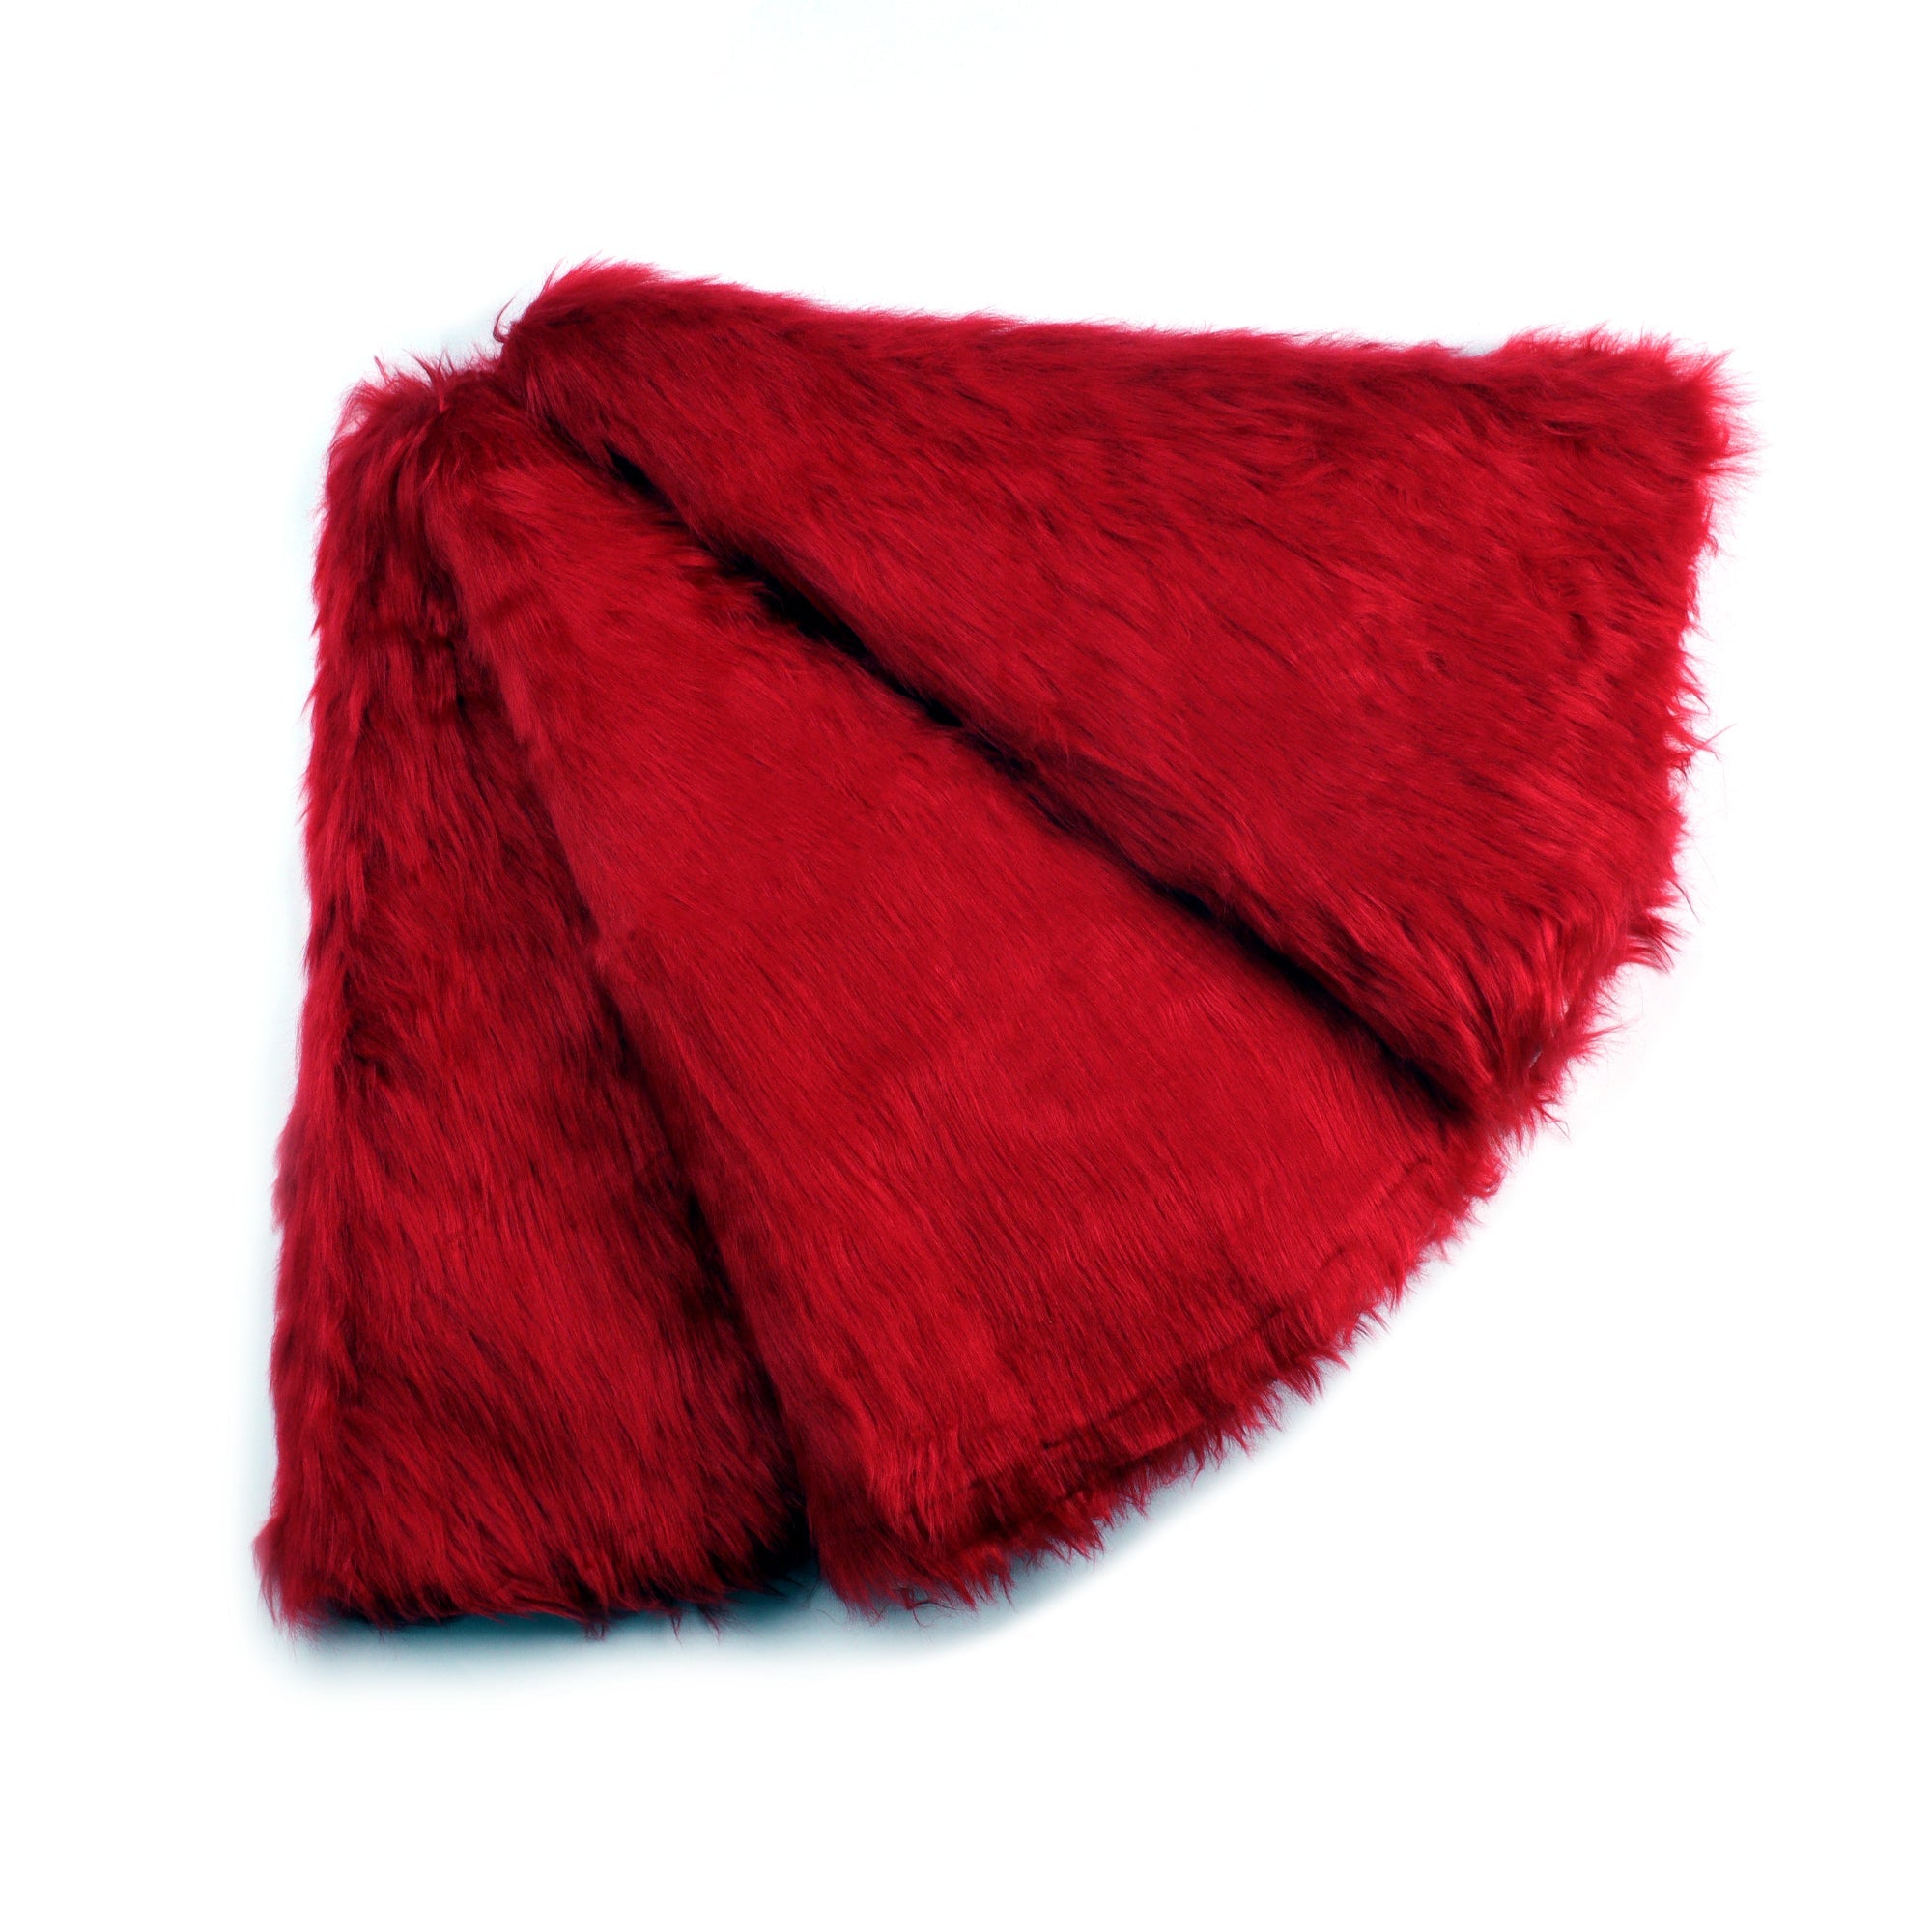 90cm Faux Fur Christmas Tree Skirt Red 090002 - MODA FLORA Santa's Workshop